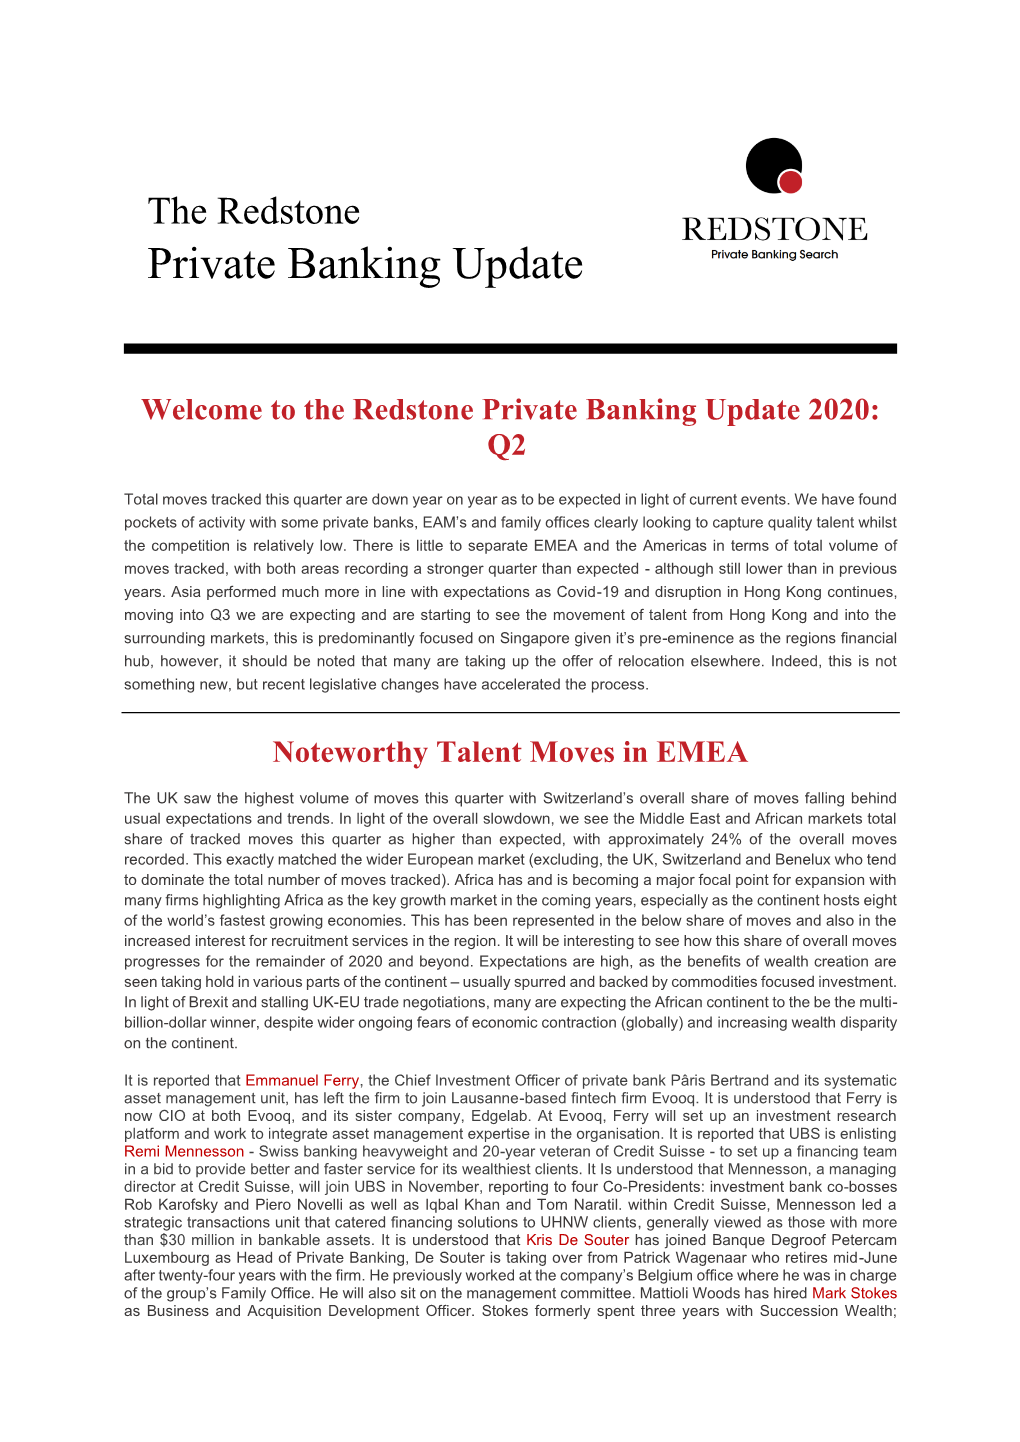 Redstone Private Banking Update Q2 2020